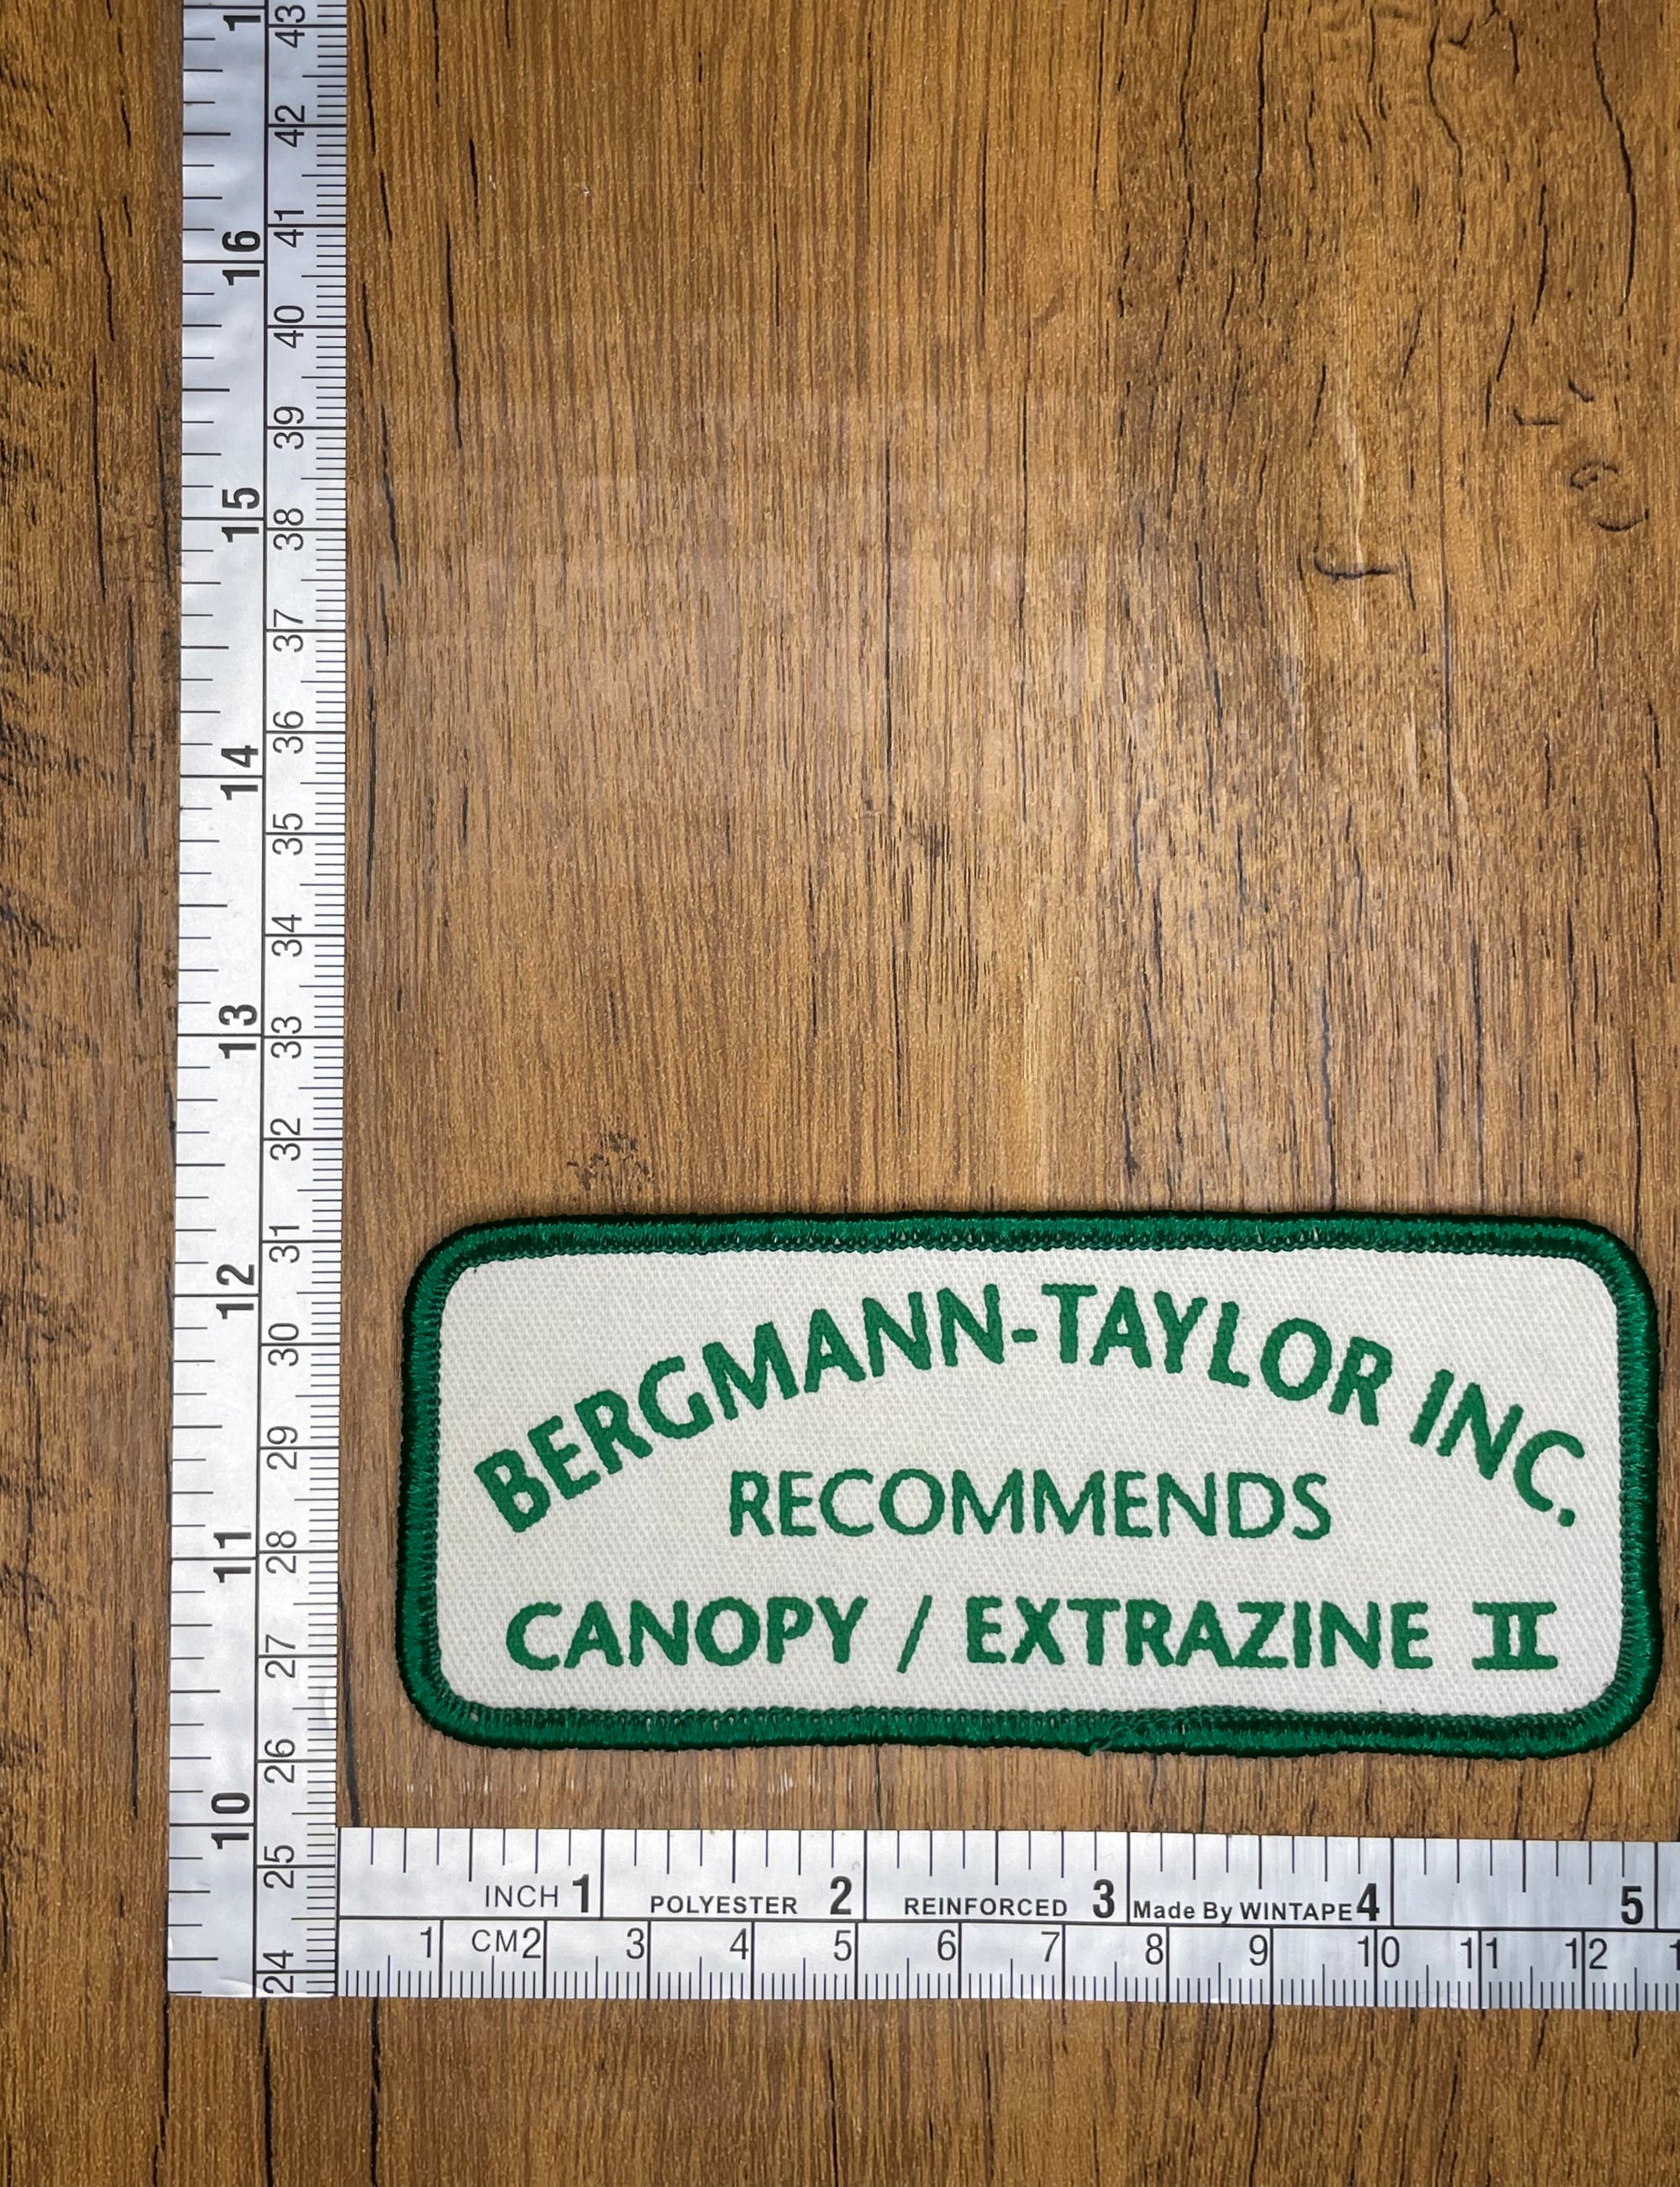 Vintage Bergmann- Taylor Inc. Recommends Canopy/Extrazine II